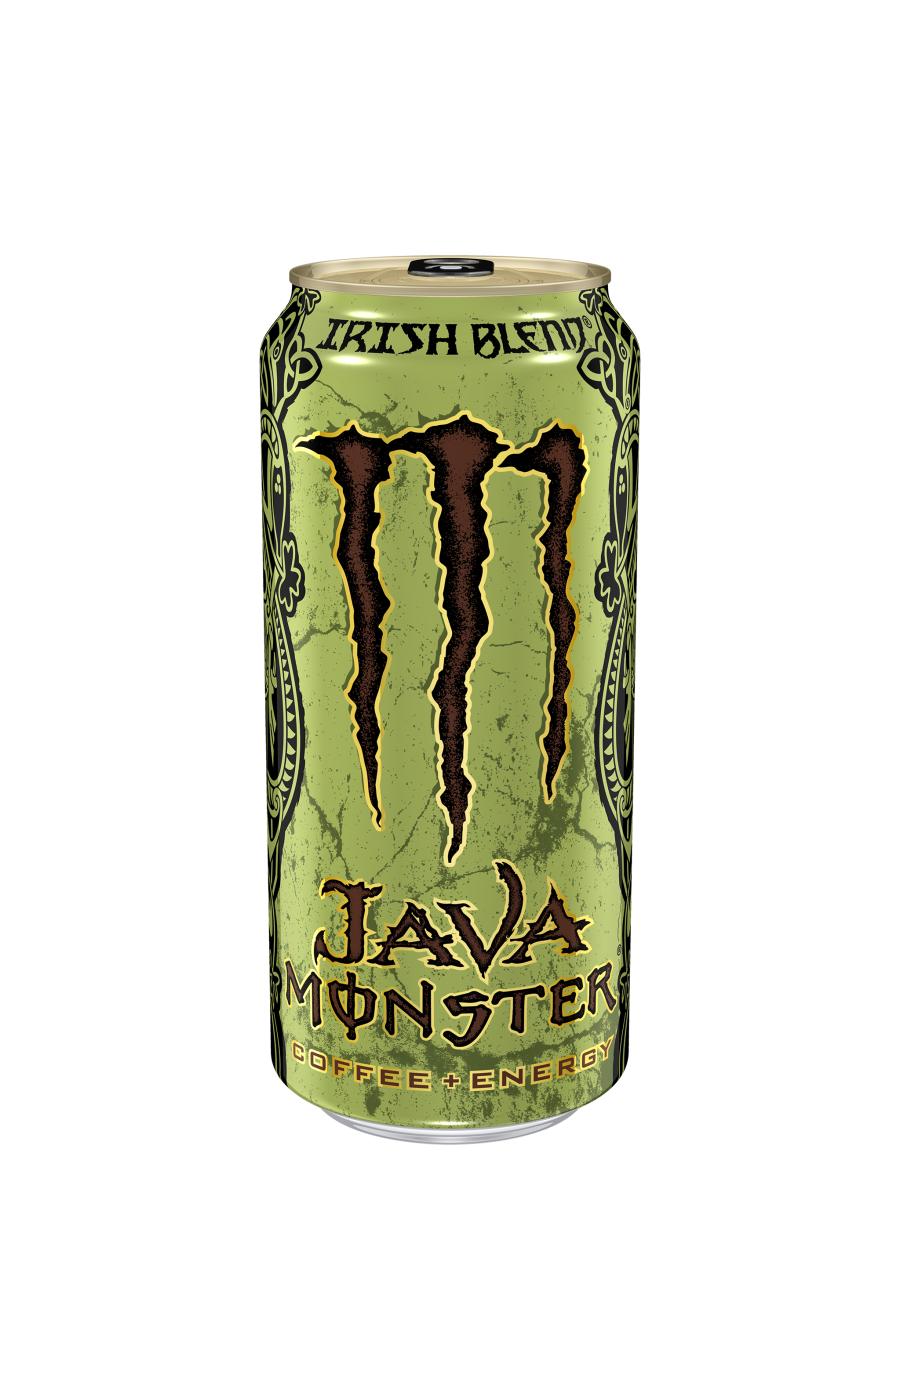 Monster Energy Java Monster Irish Blend, Coffee + Energy; image 1 of 2